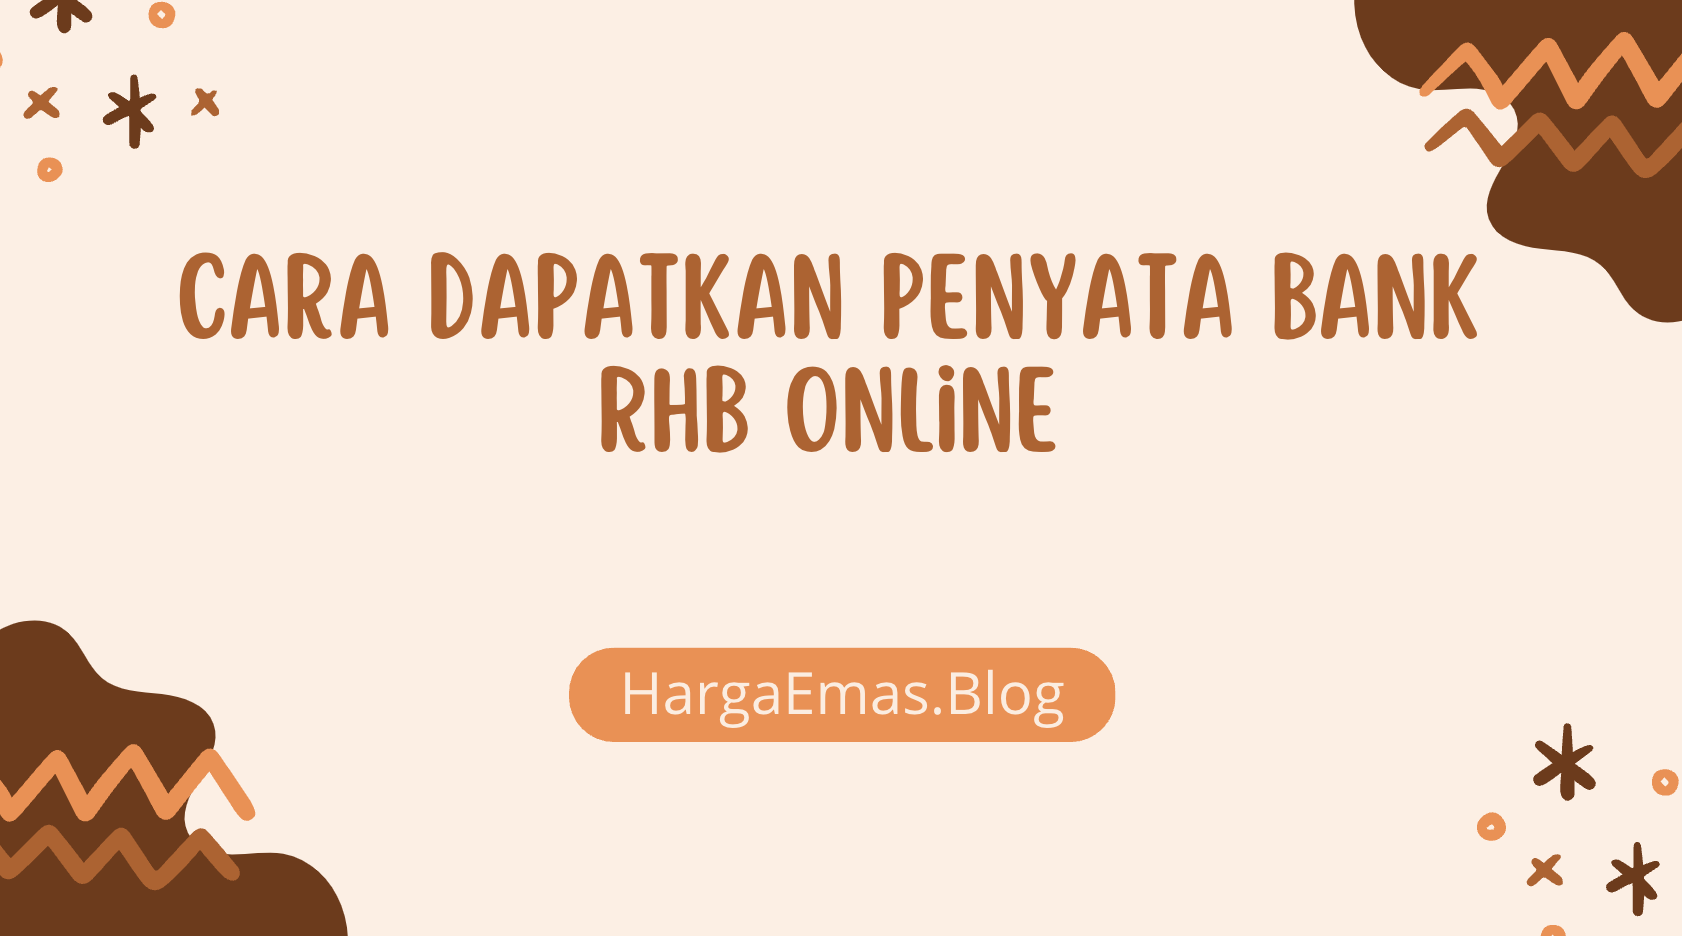 Cara Dapatkan Penyata Bank RHB Online